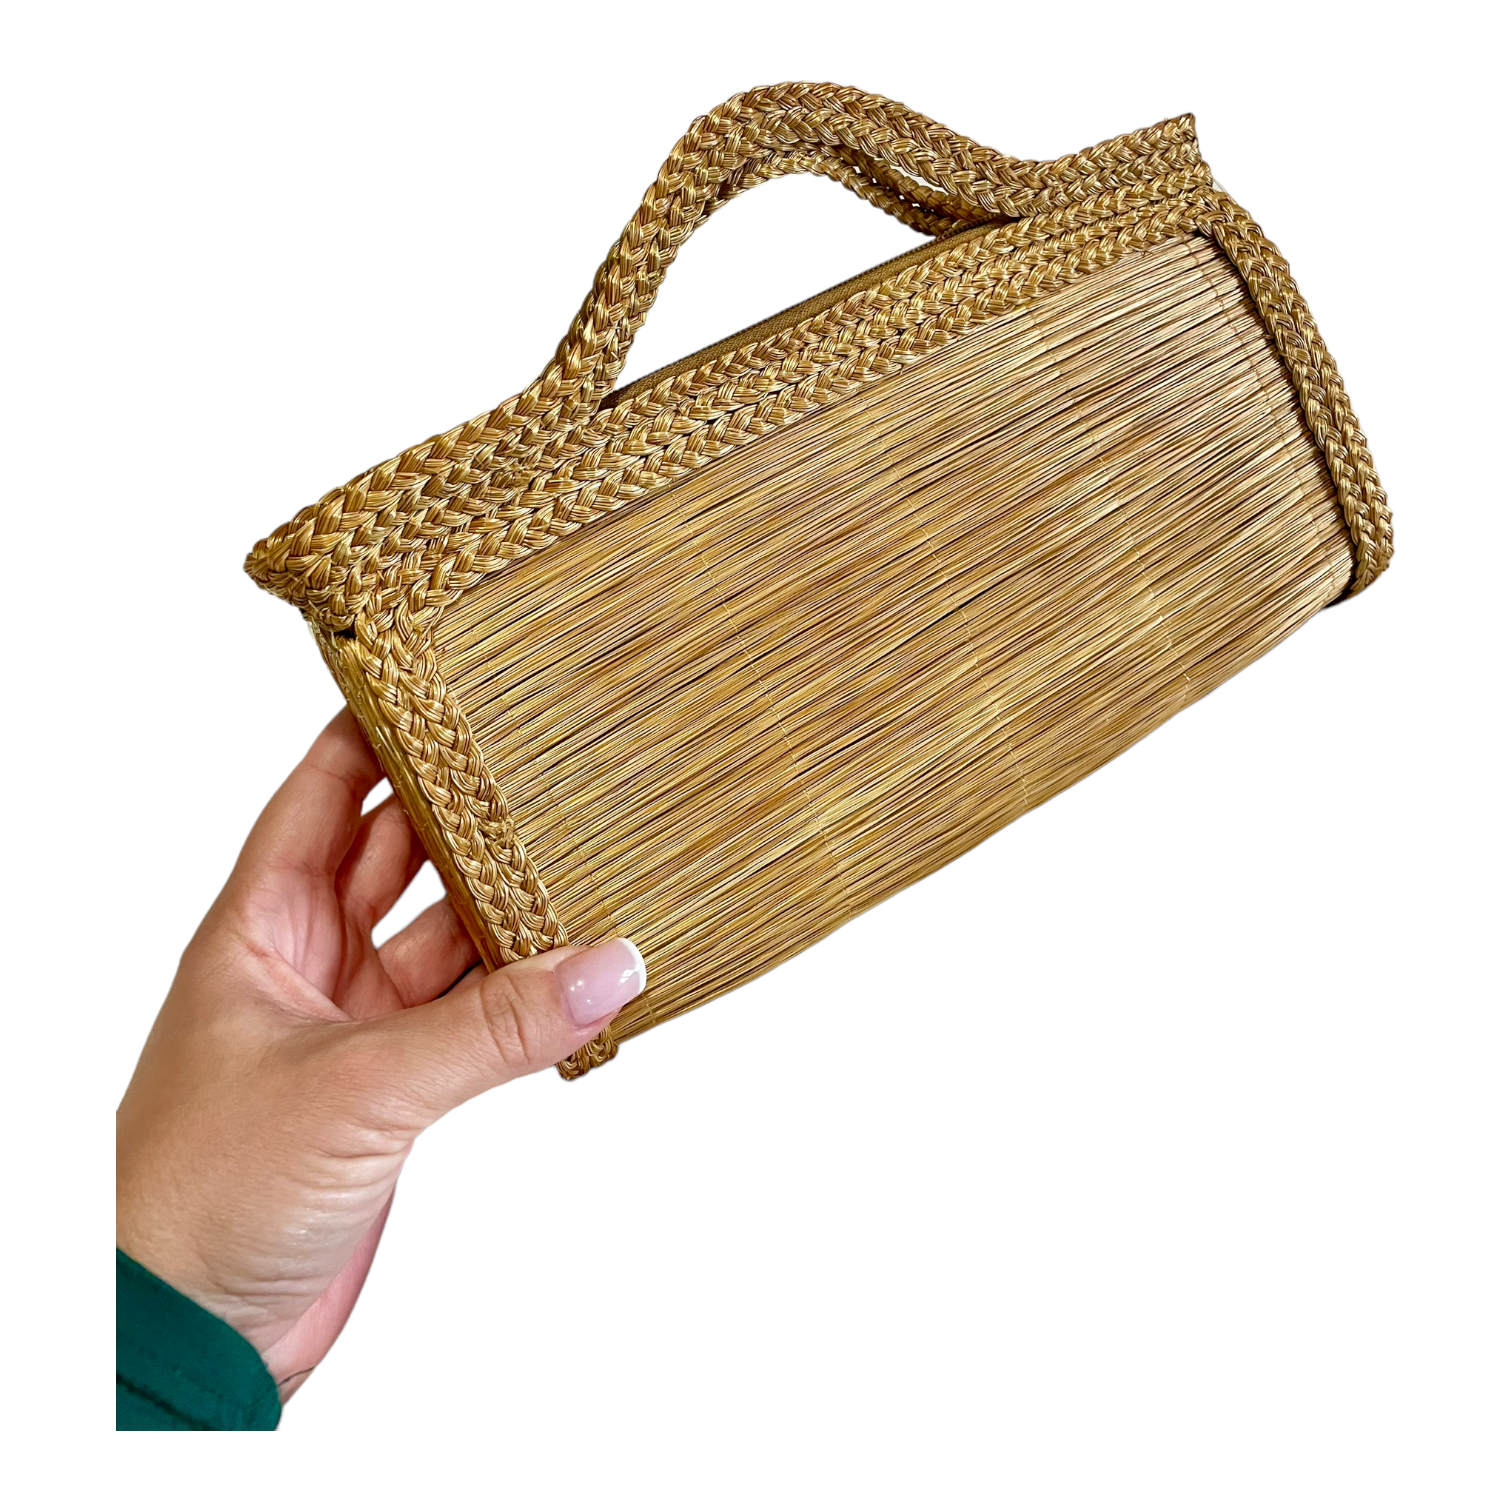 Golden Grass Clutch Bag - Treasures of Brazil